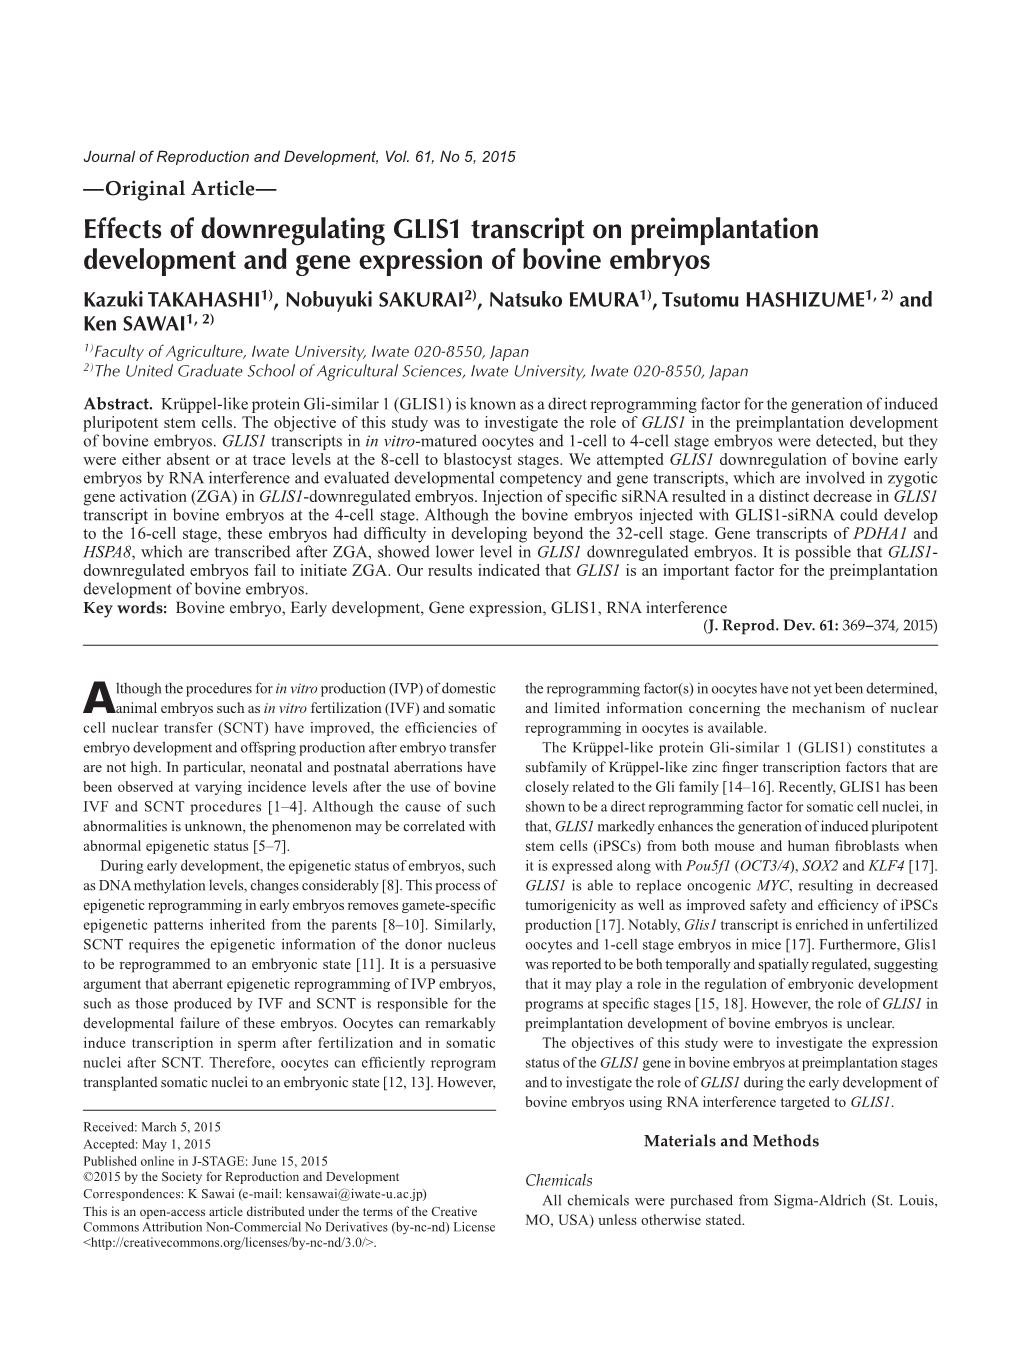 Effects of Downregulating GLIS1 Transcript On